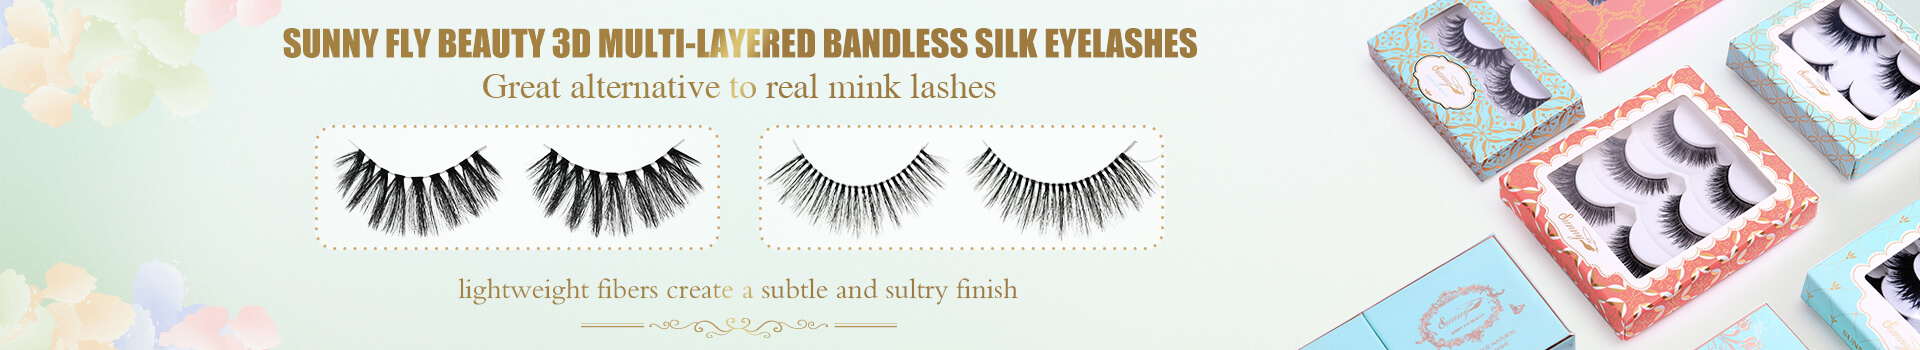 3D Multi-Layered Bandless Silk Eyelas TA16